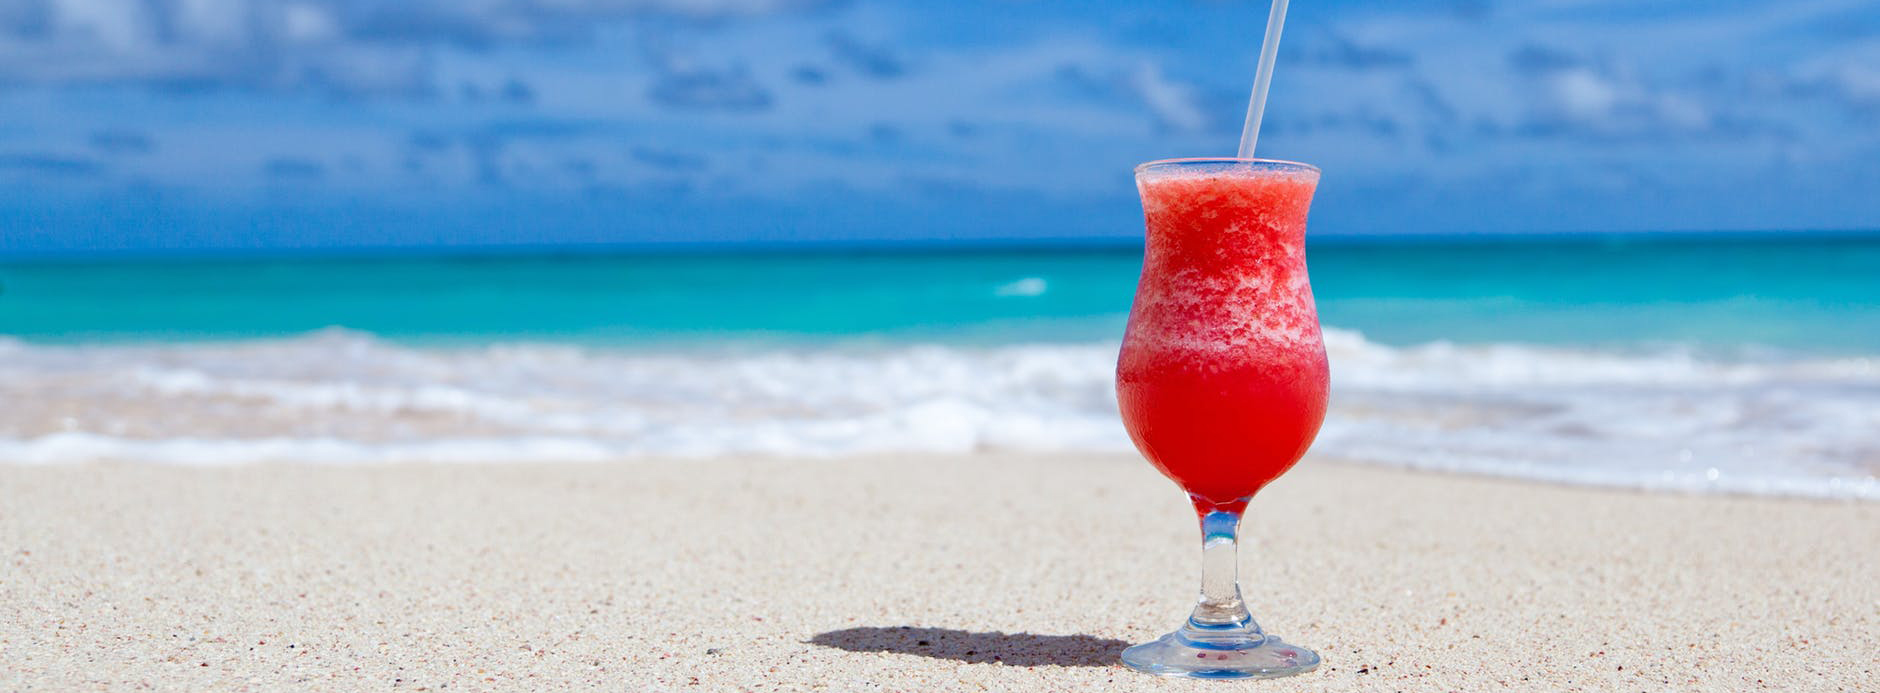  beach-beverage-caribbean-cocktail-68672.jpeg